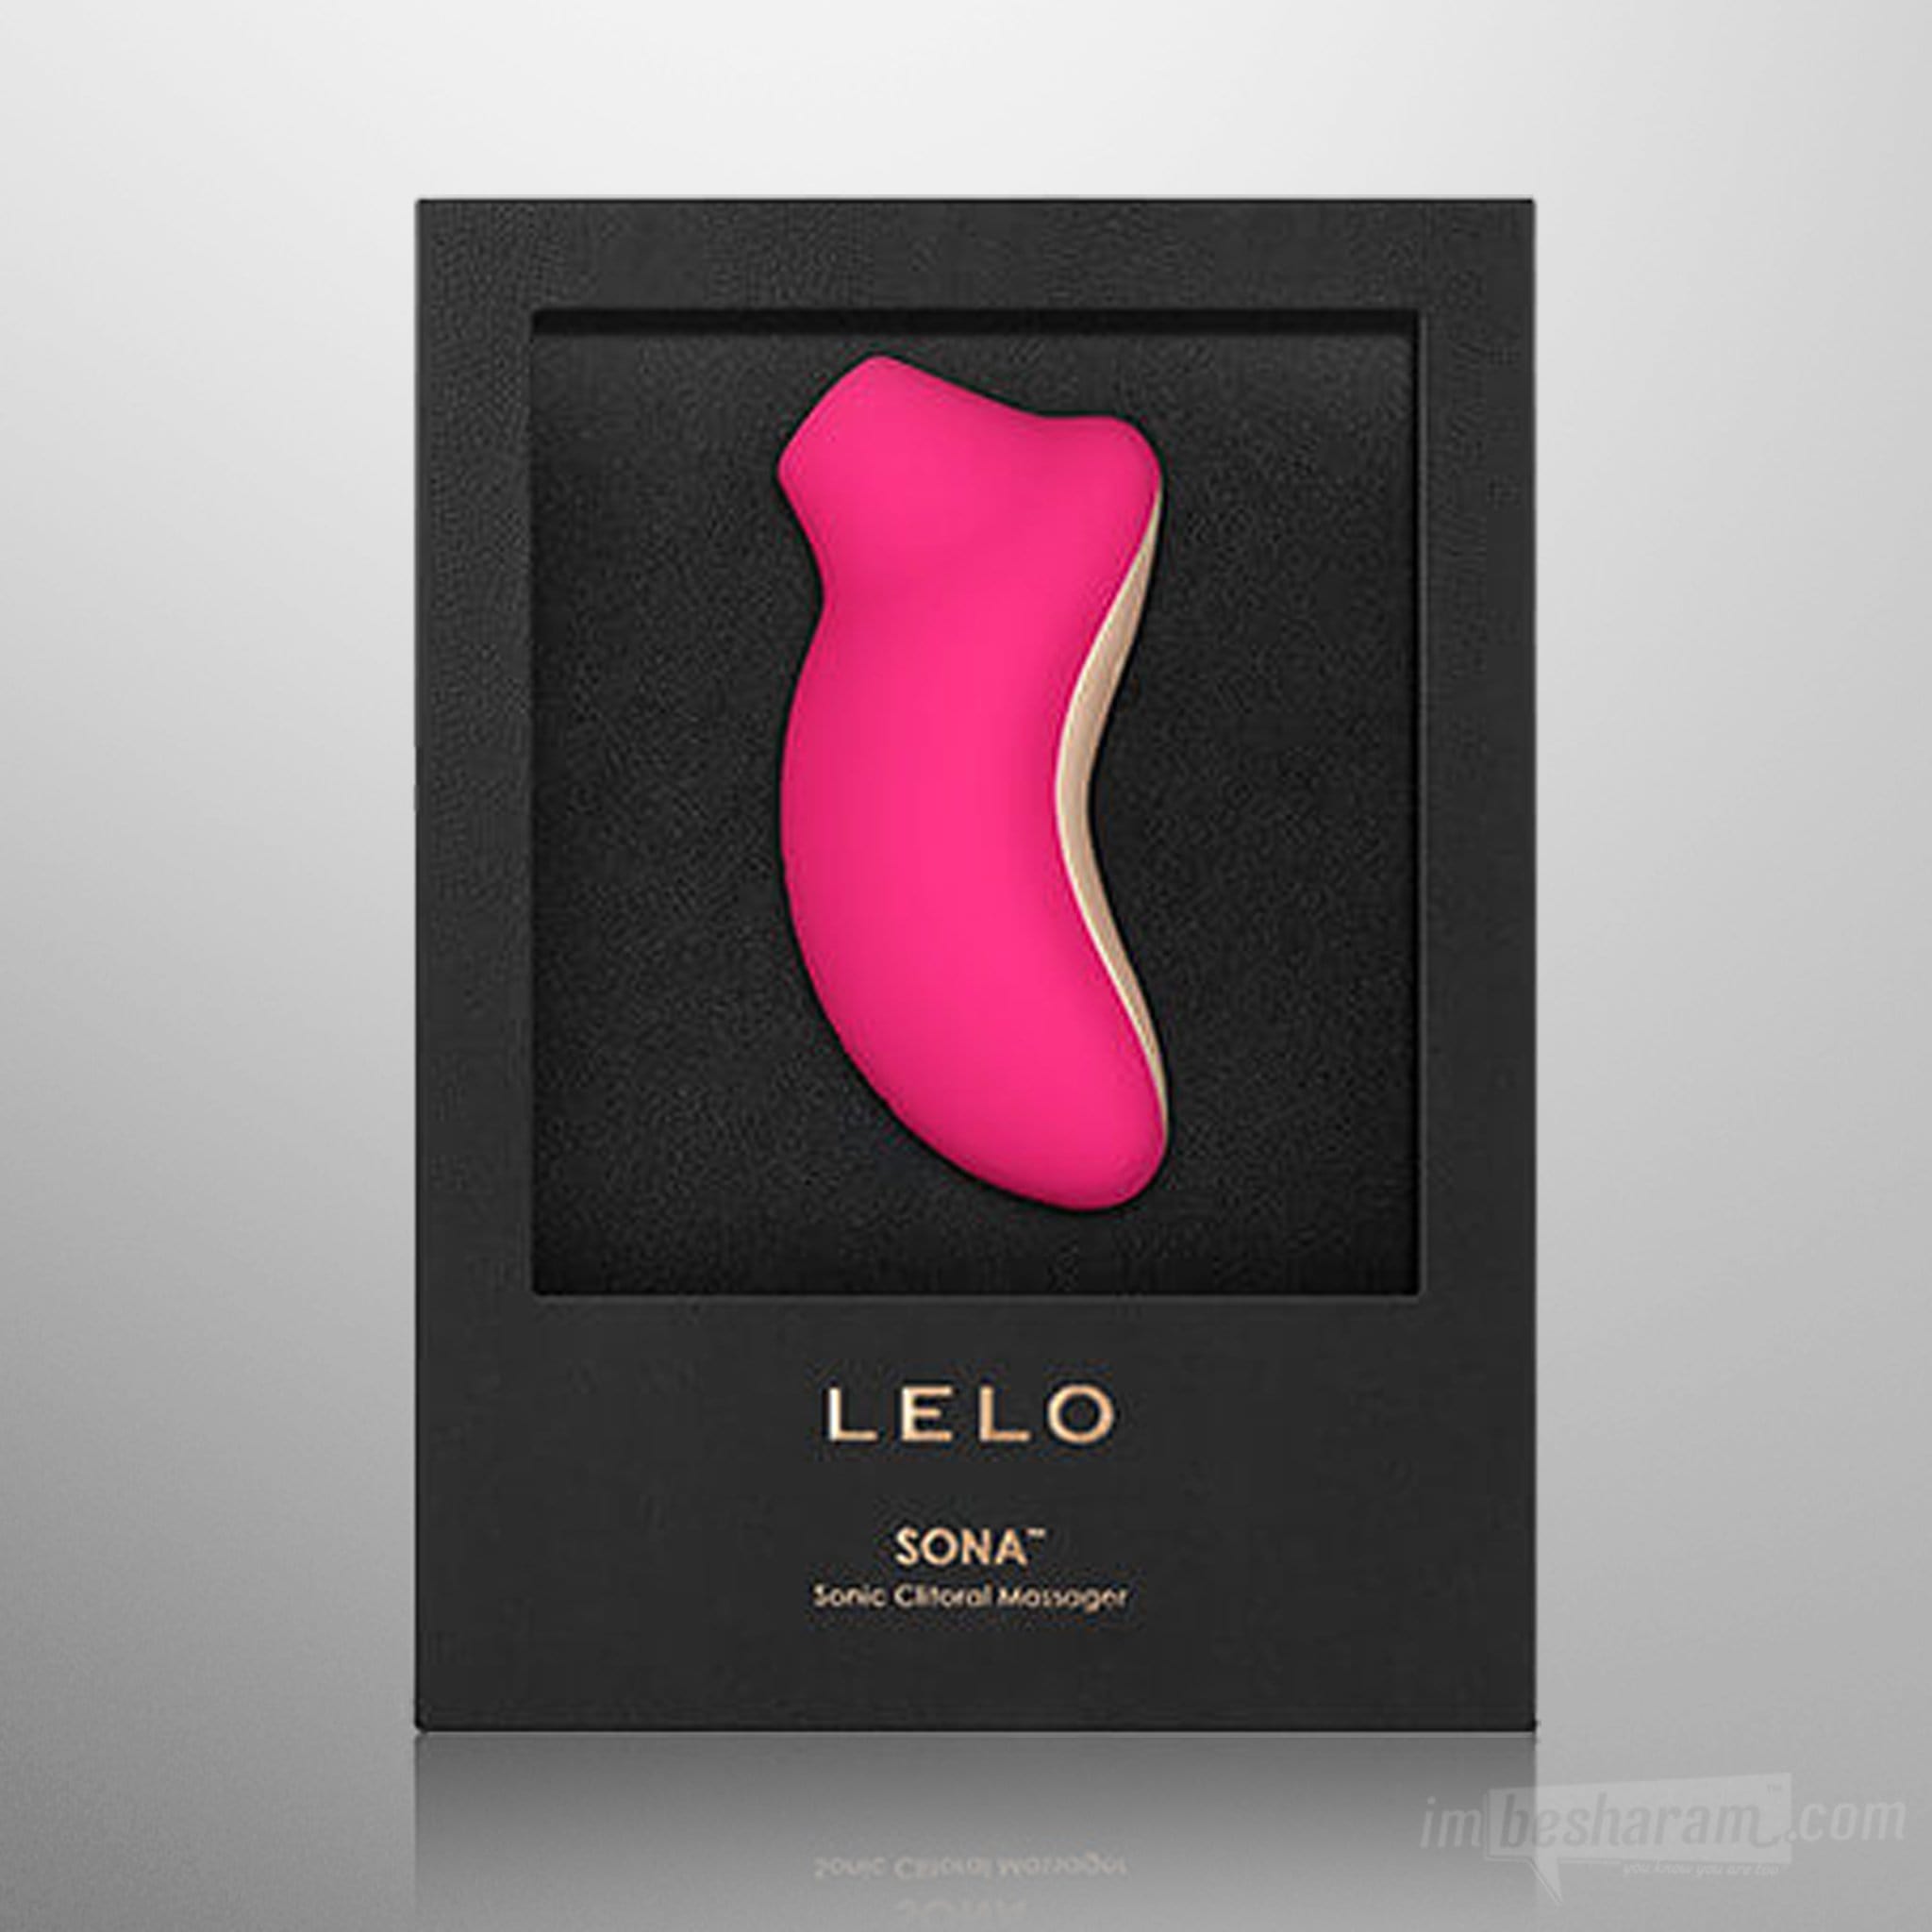 Lelo Sona™ Luxury Clitoral Massager - Bestseller! Cerise in Box